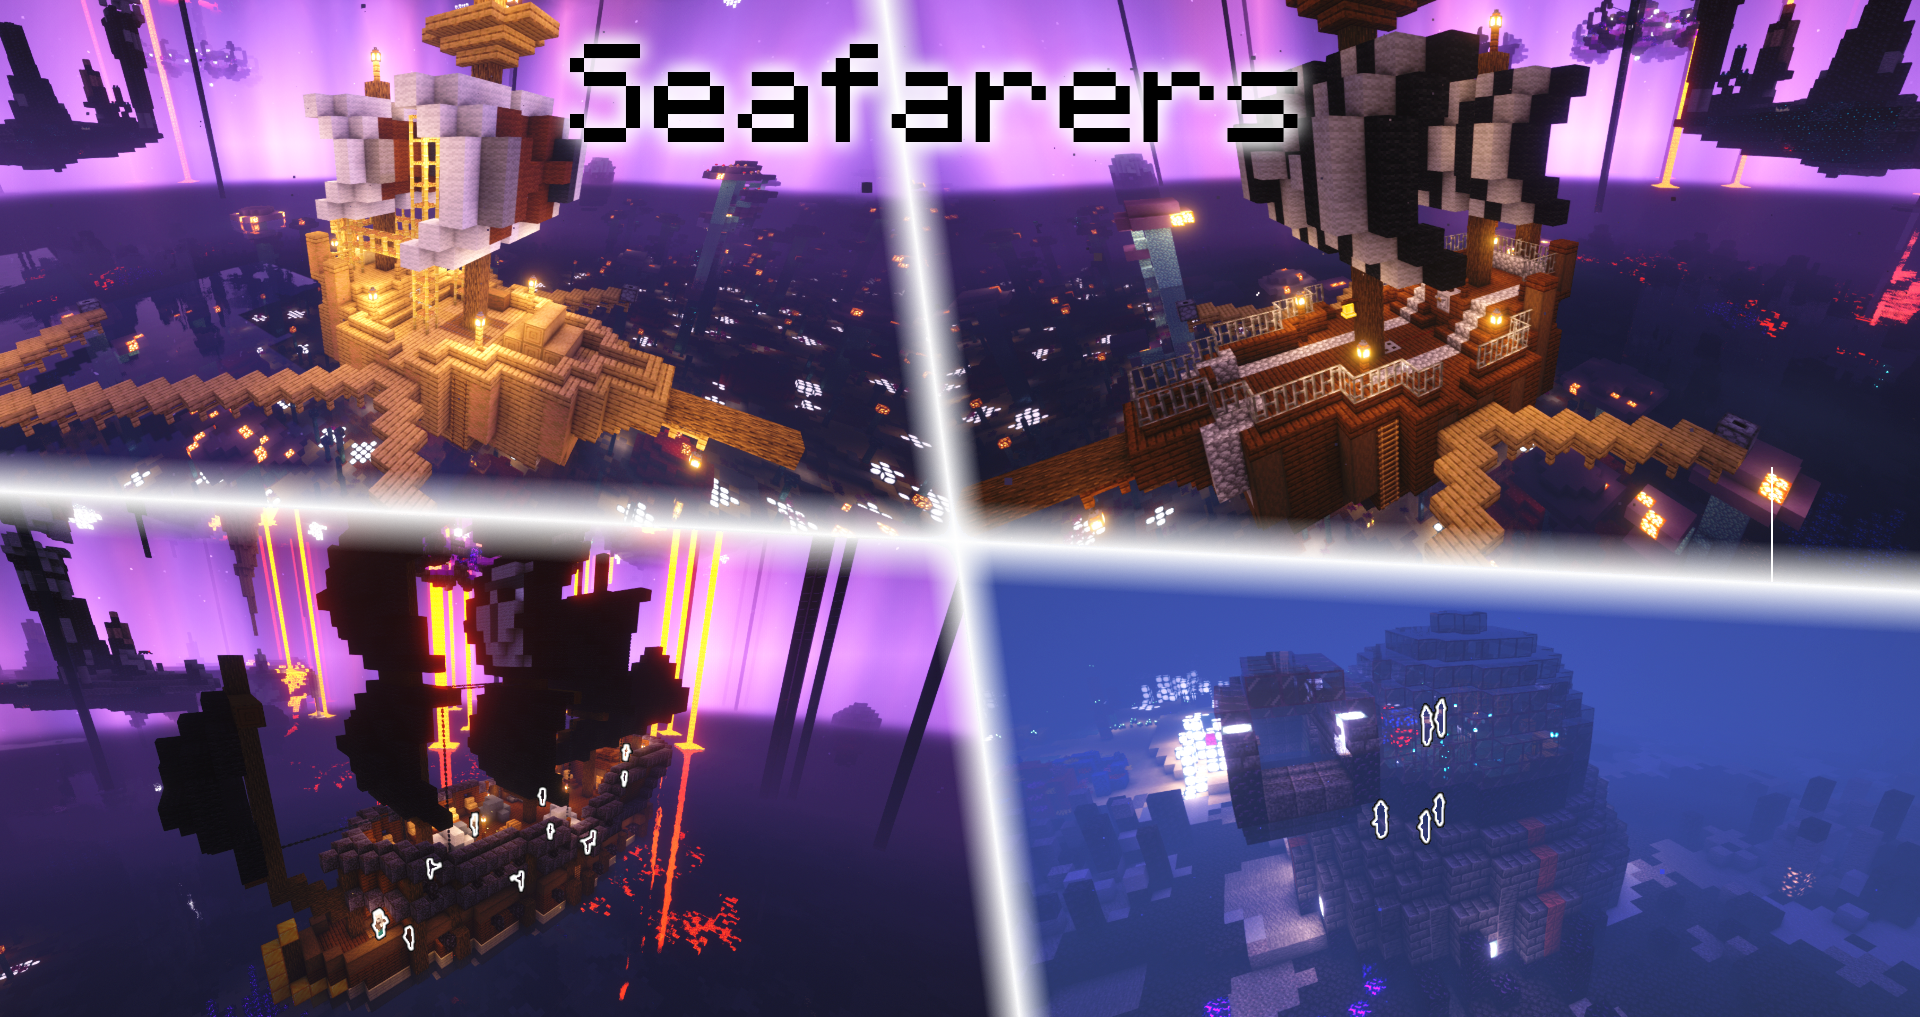 8. Seafarers